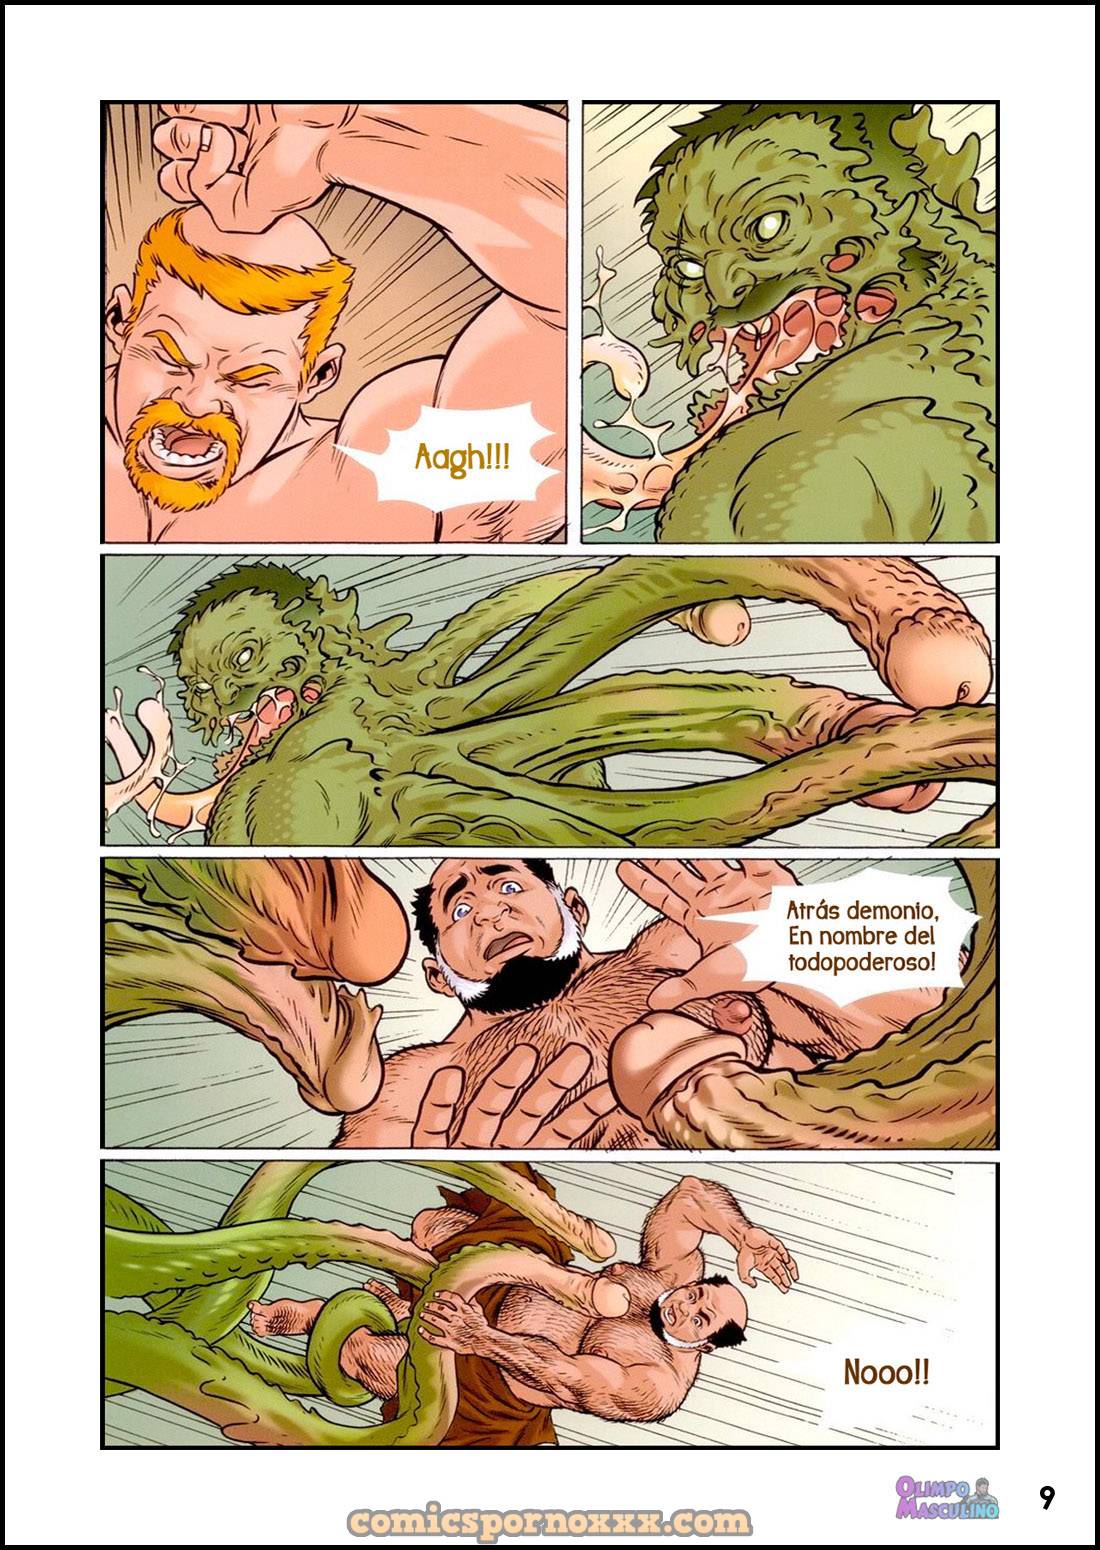 Pornomicon (Hombres Gay Violados por Tentáculos) - 9 - Comics Porno - Hentai Manga - Cartoon XXX